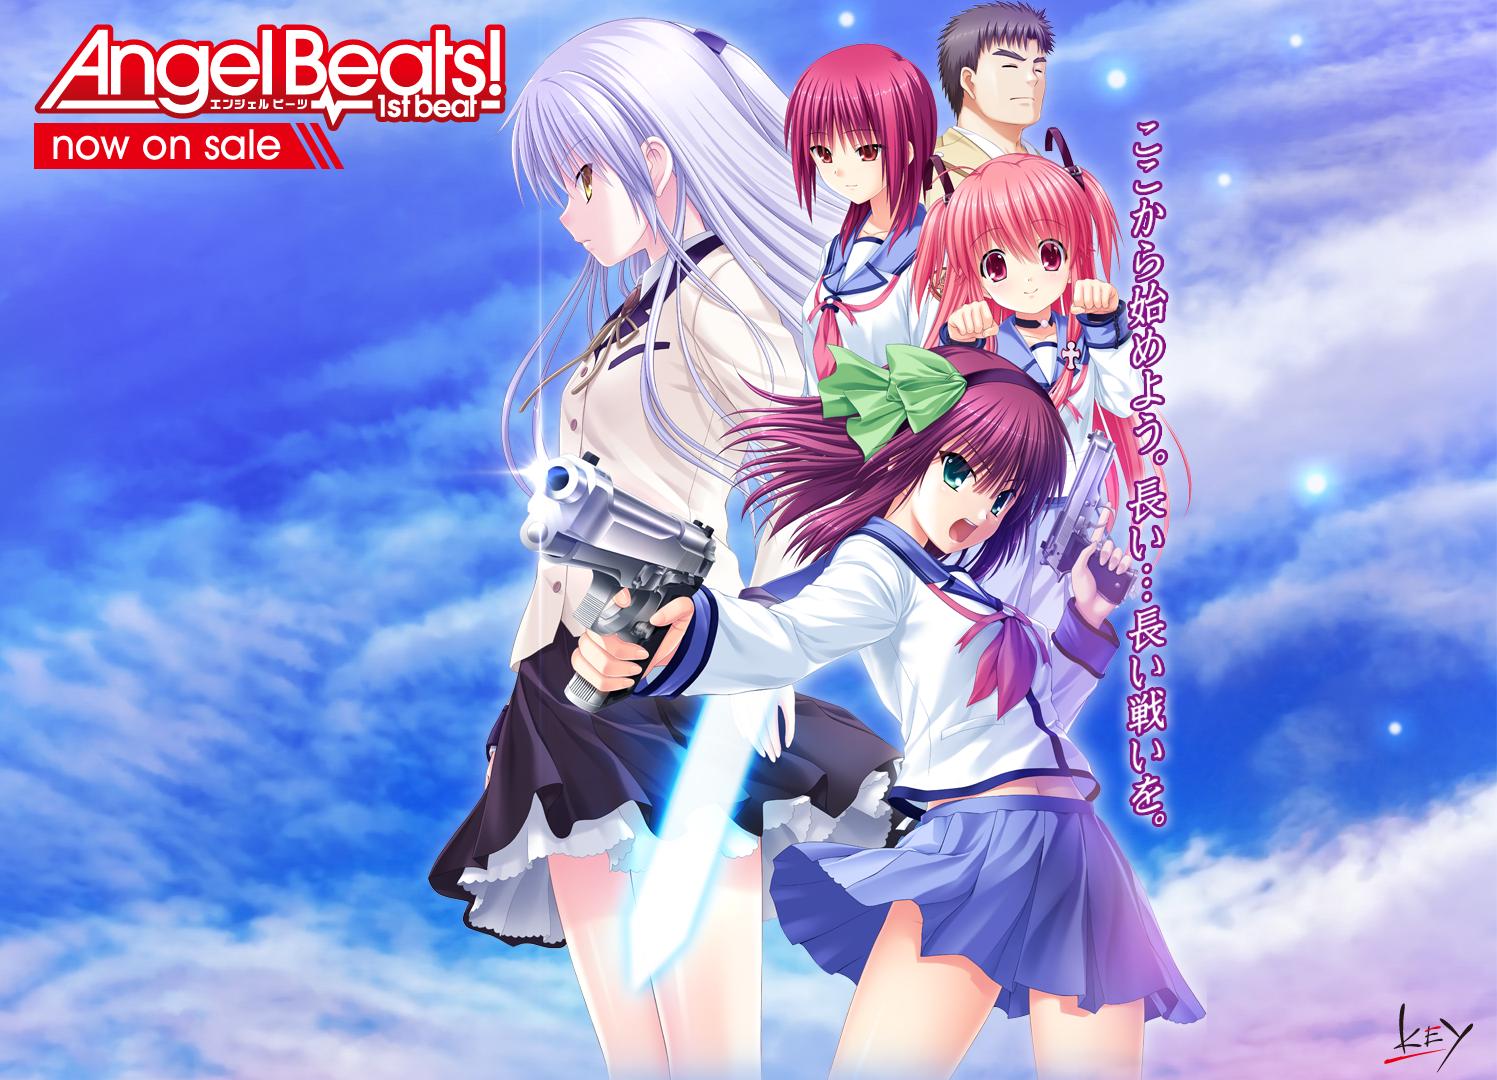 《Angel Beats! -1st beat-》游戏下载